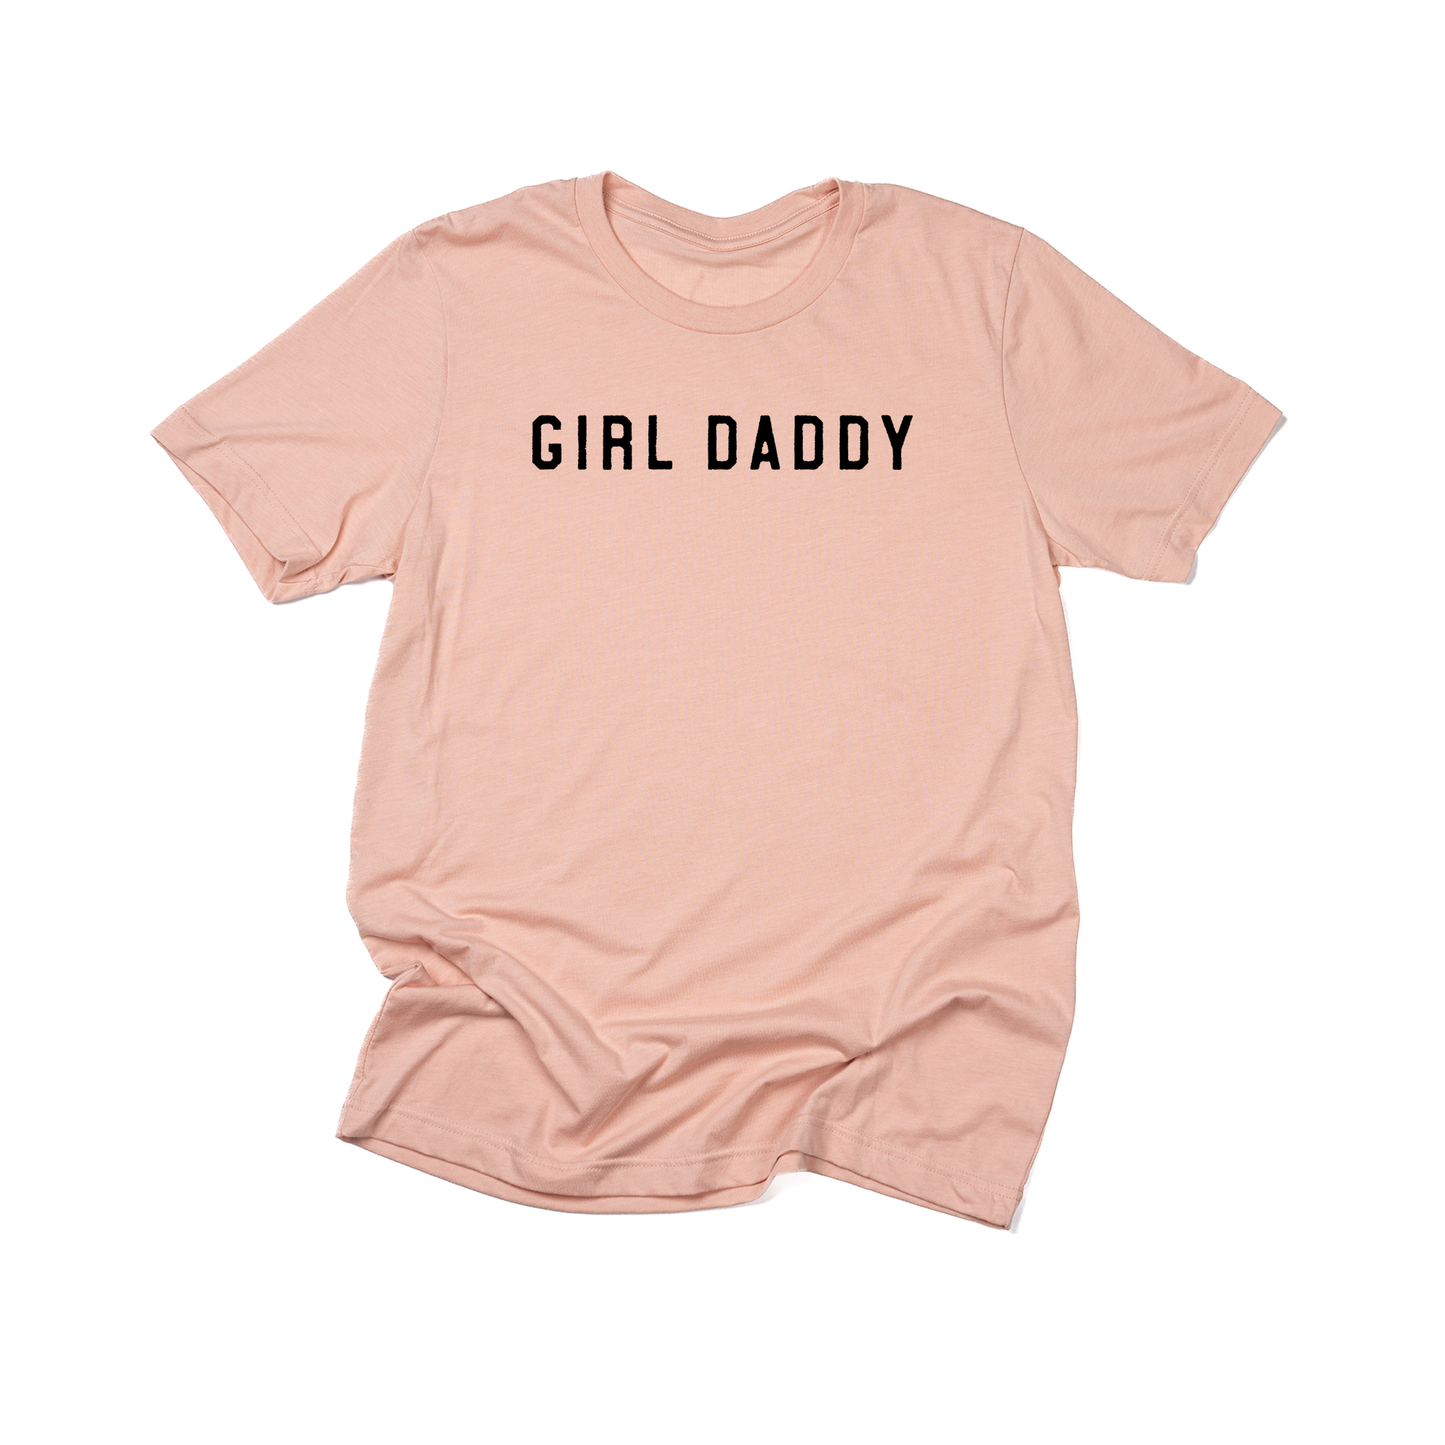 Girl Daddy (Black) - Tee (Peach)